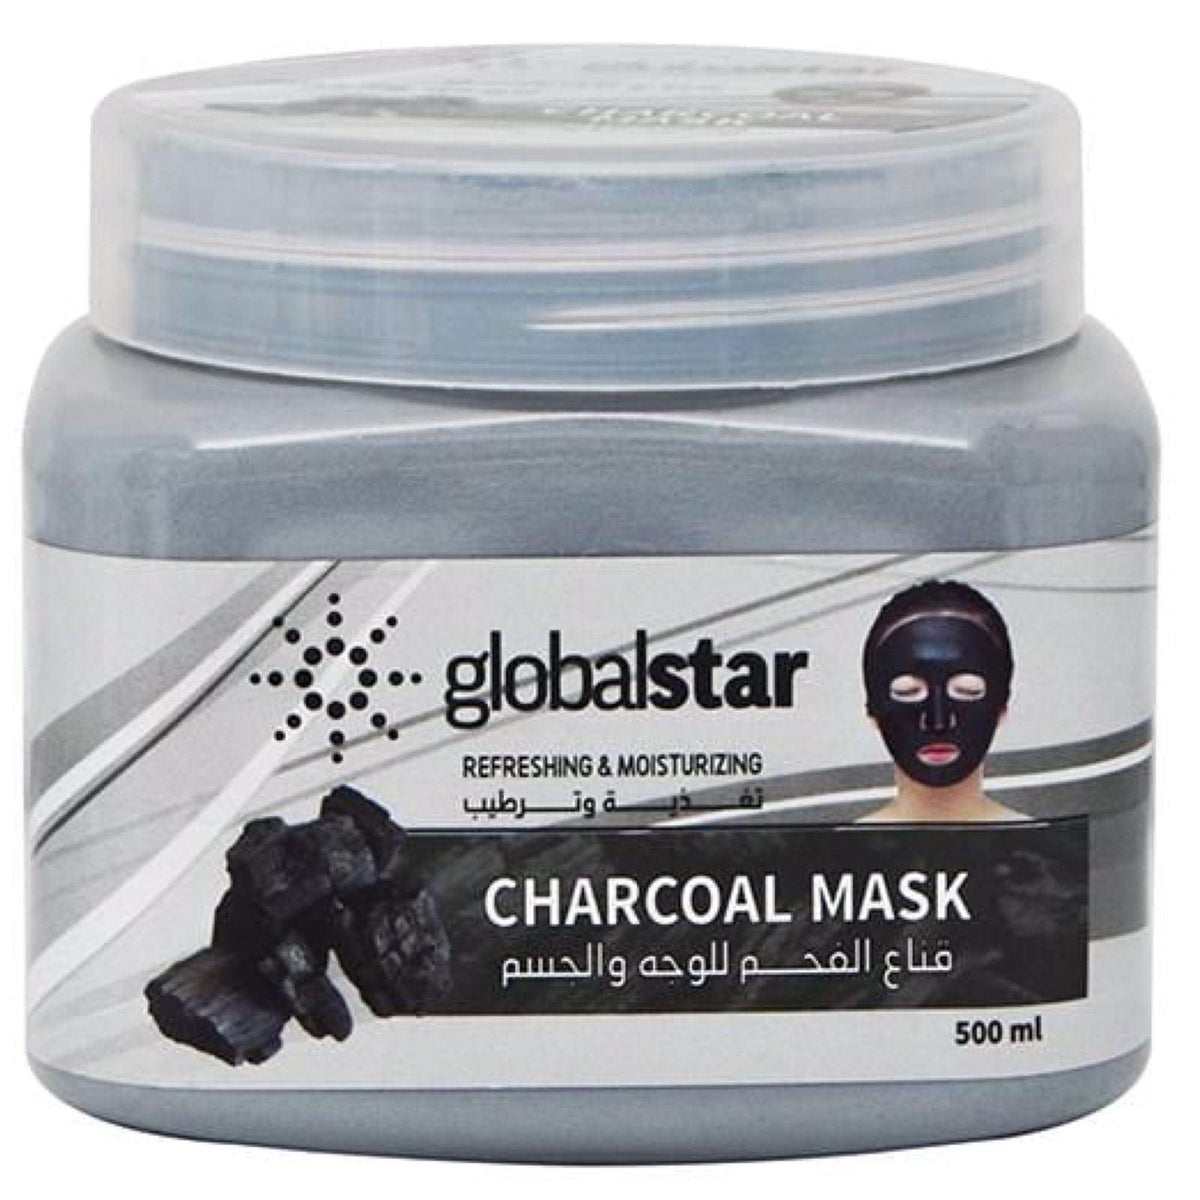 Globalstar Charcoal Clay Mask 500ml